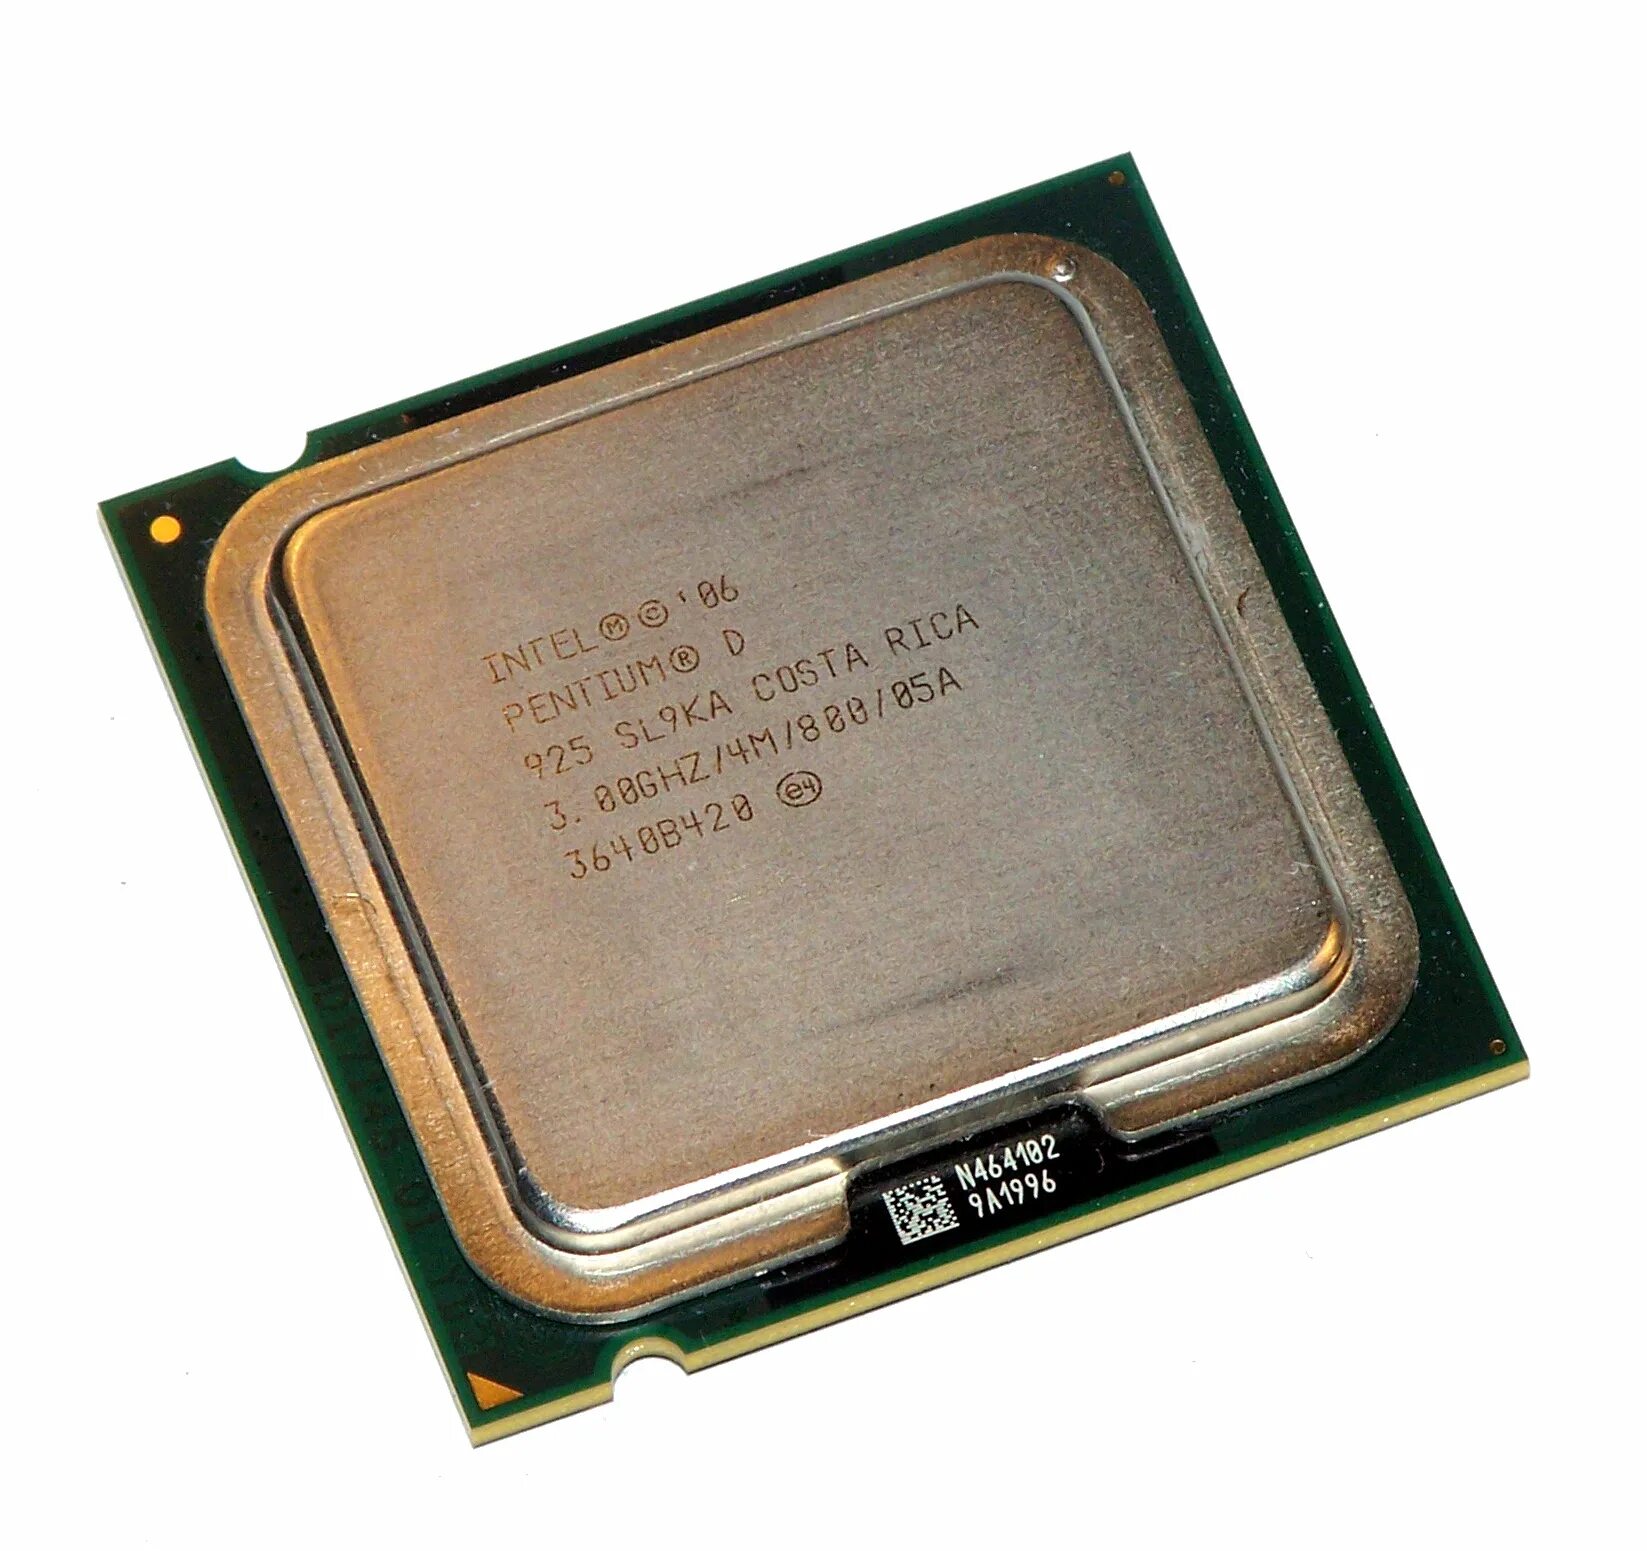 Интел коре пентиум. Интел пентиум 925. Intel Pentium 925 sl9d9 Costa Rica. Intel Pentium d 925. Intel Core 2 Duo d925.